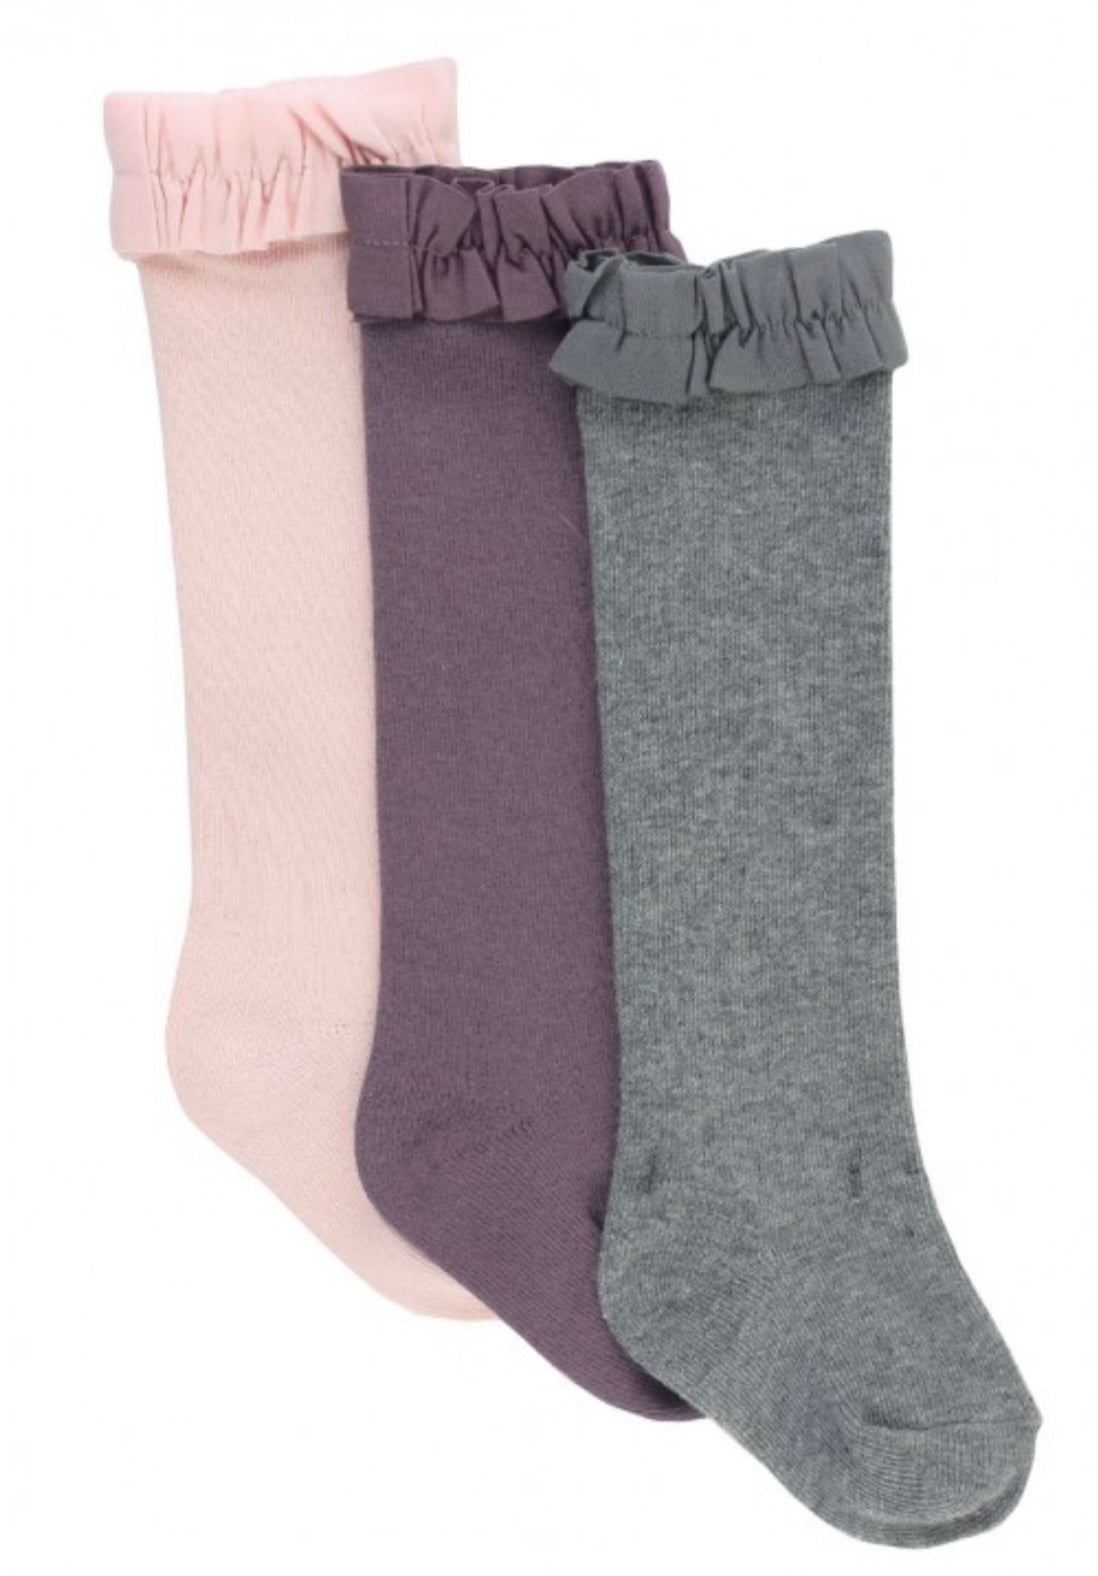 3-Pk Knee High Socks (purple, ballet pink, charcoal)